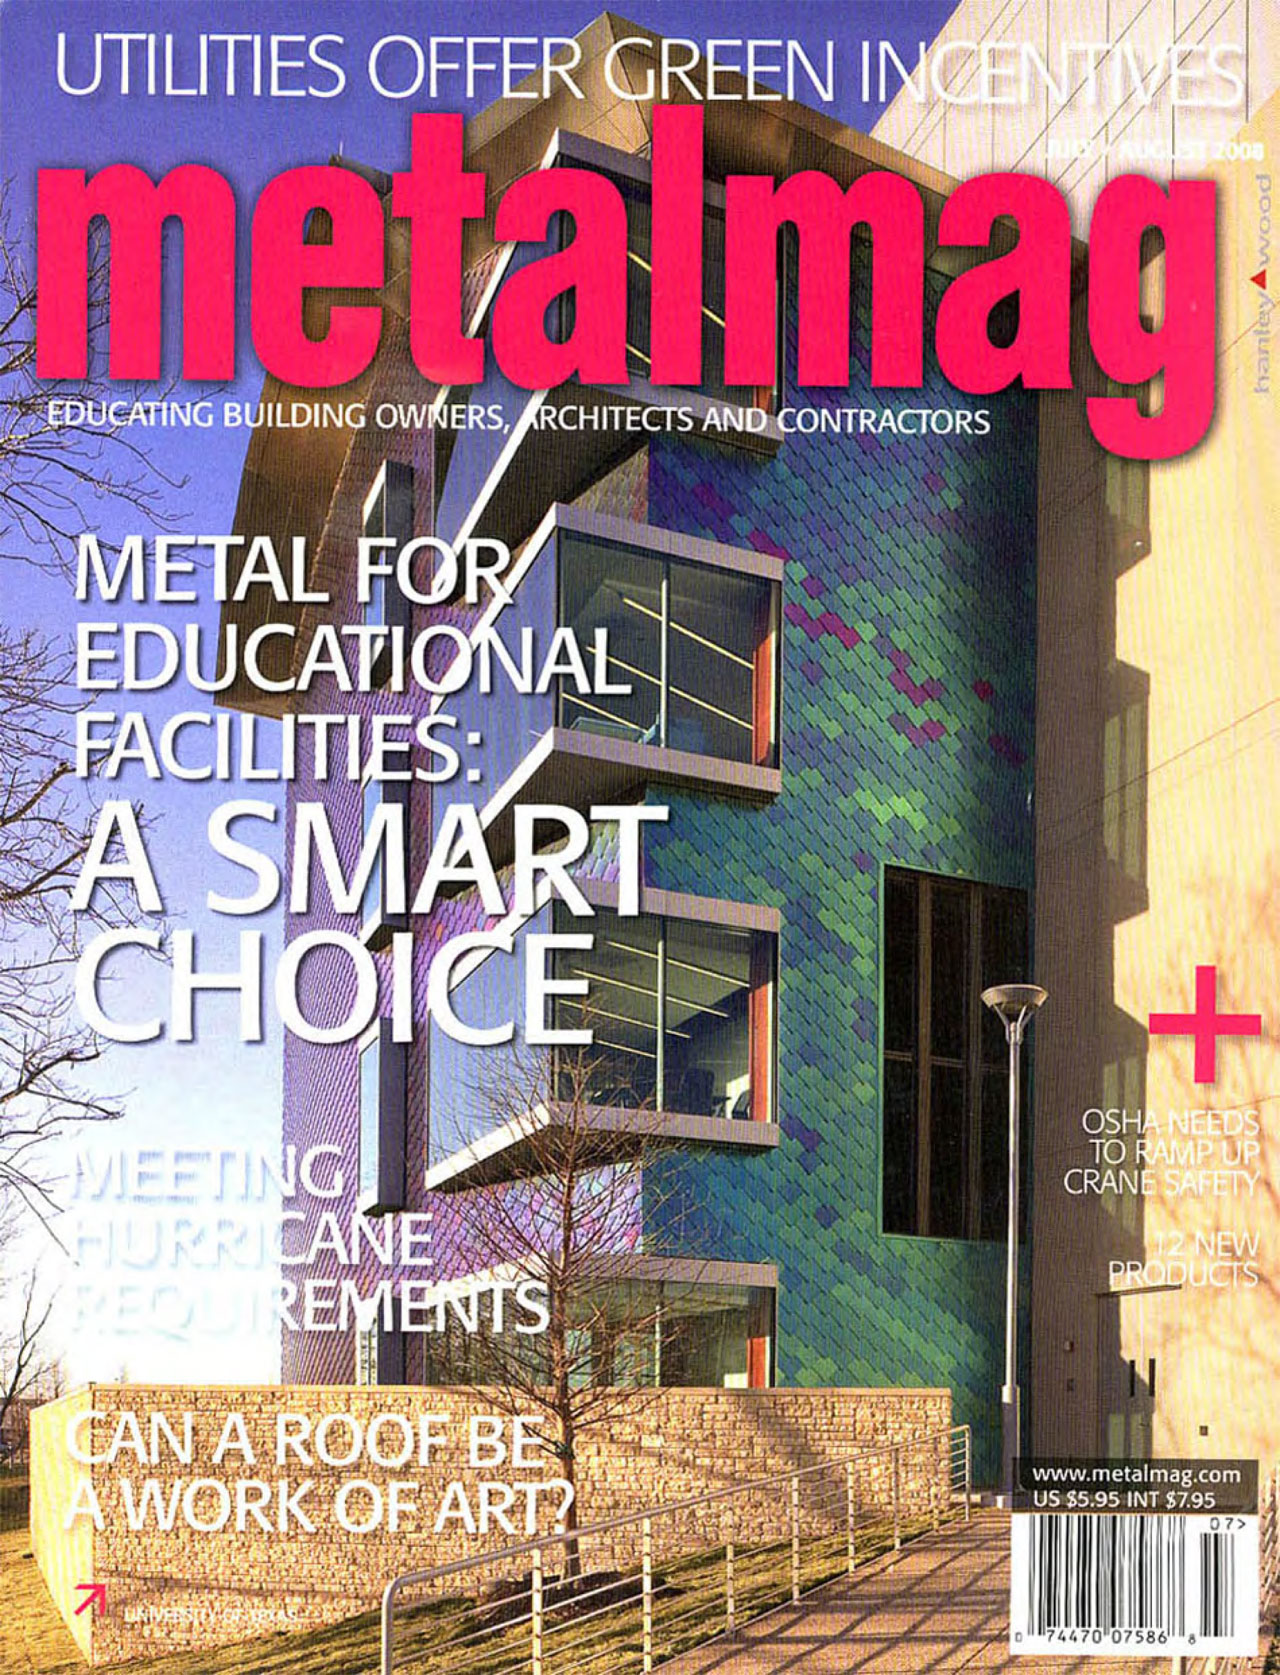 02_News_Metal-Magazine-Whalerock-Lane-01_web_w1280